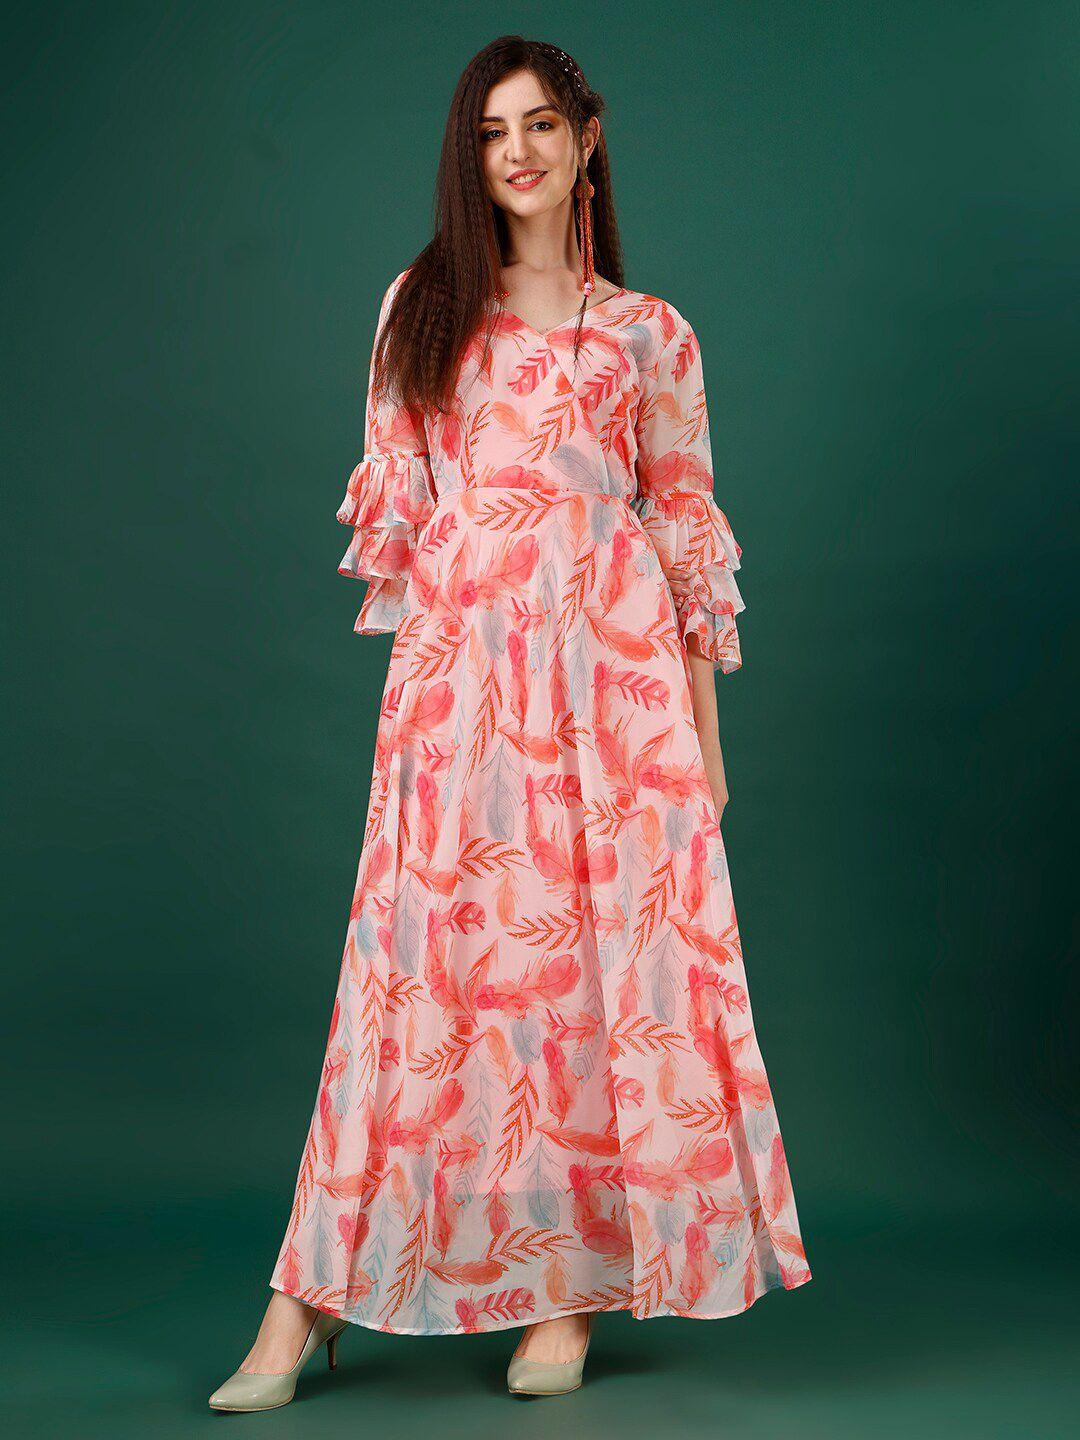 hetvi-creation-floral-printed-bell-sleeve-georgette-maxi-dress